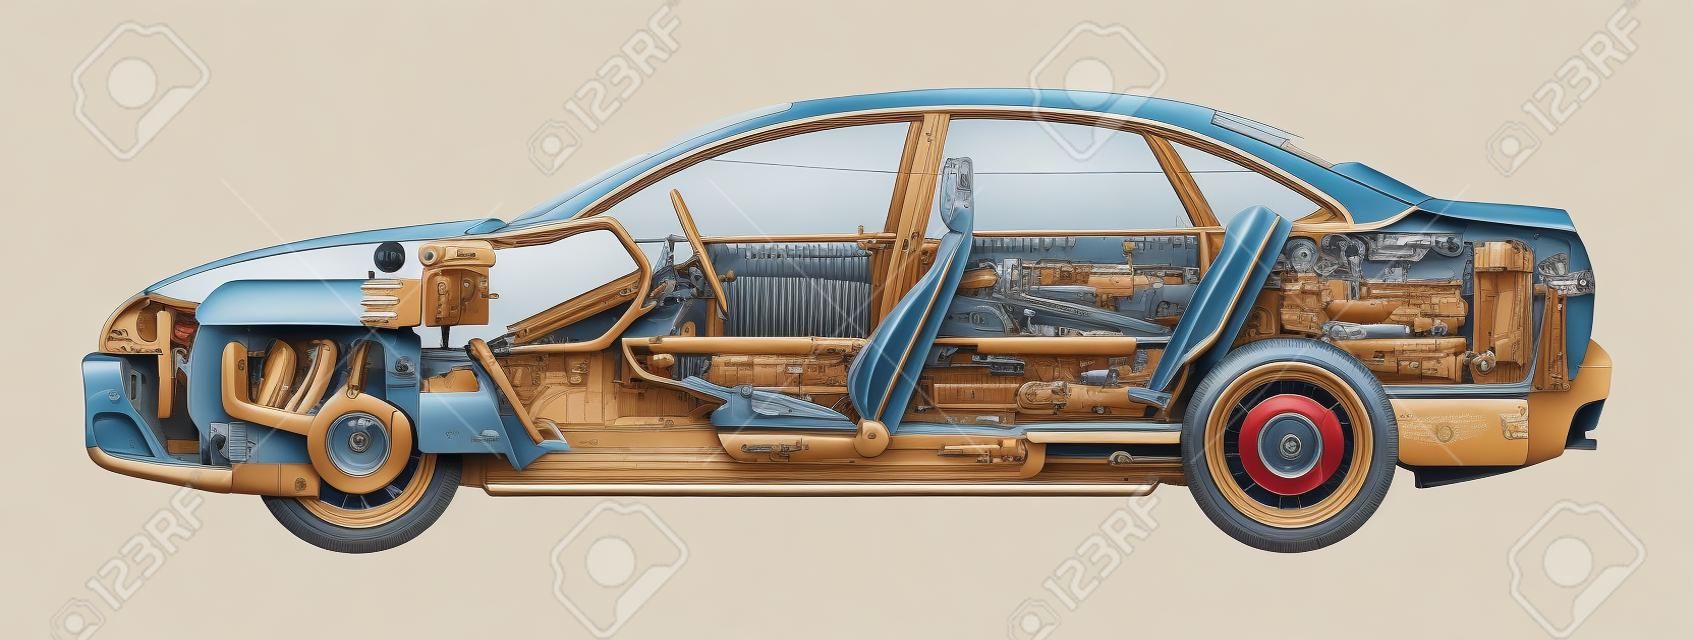 Cutaway Car Illustrations. 